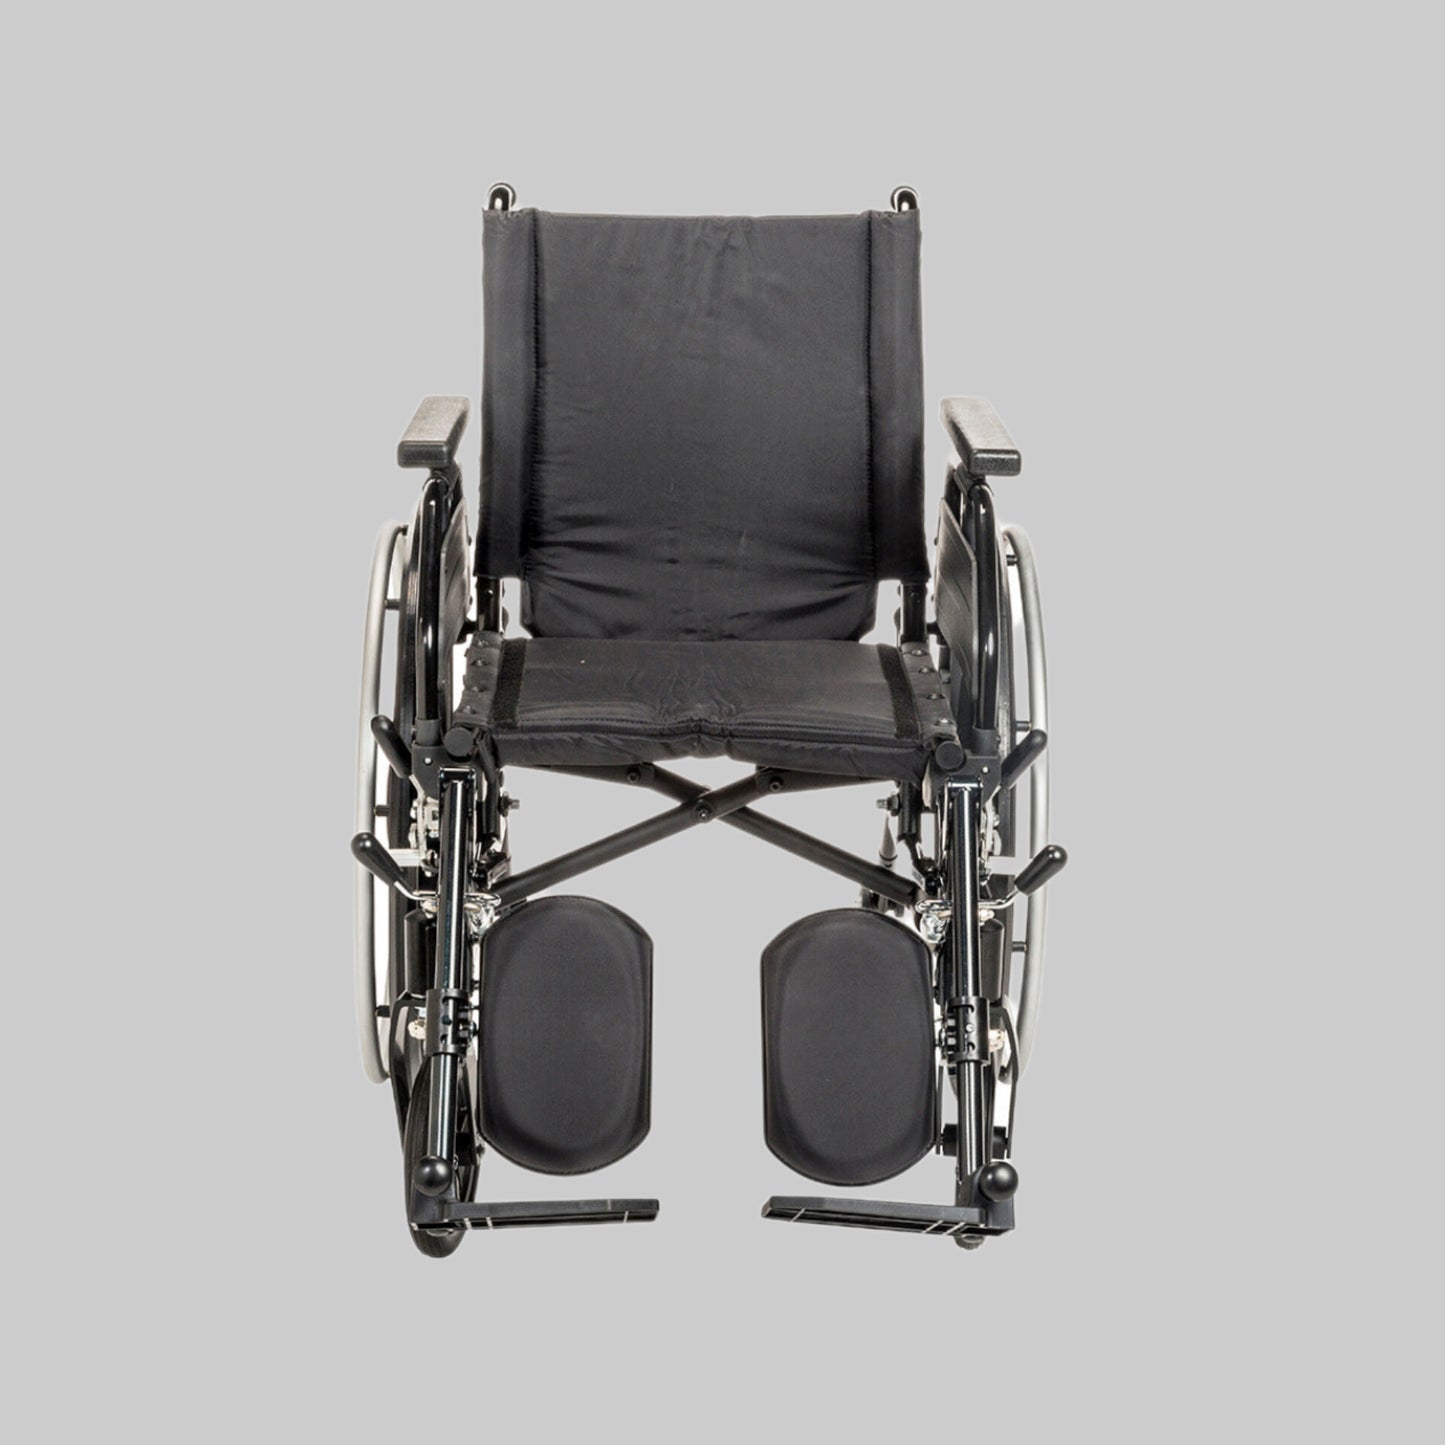 DRIVE Viper Plus GT Wheelchair 18" Flip Adjustable Height Black (New)